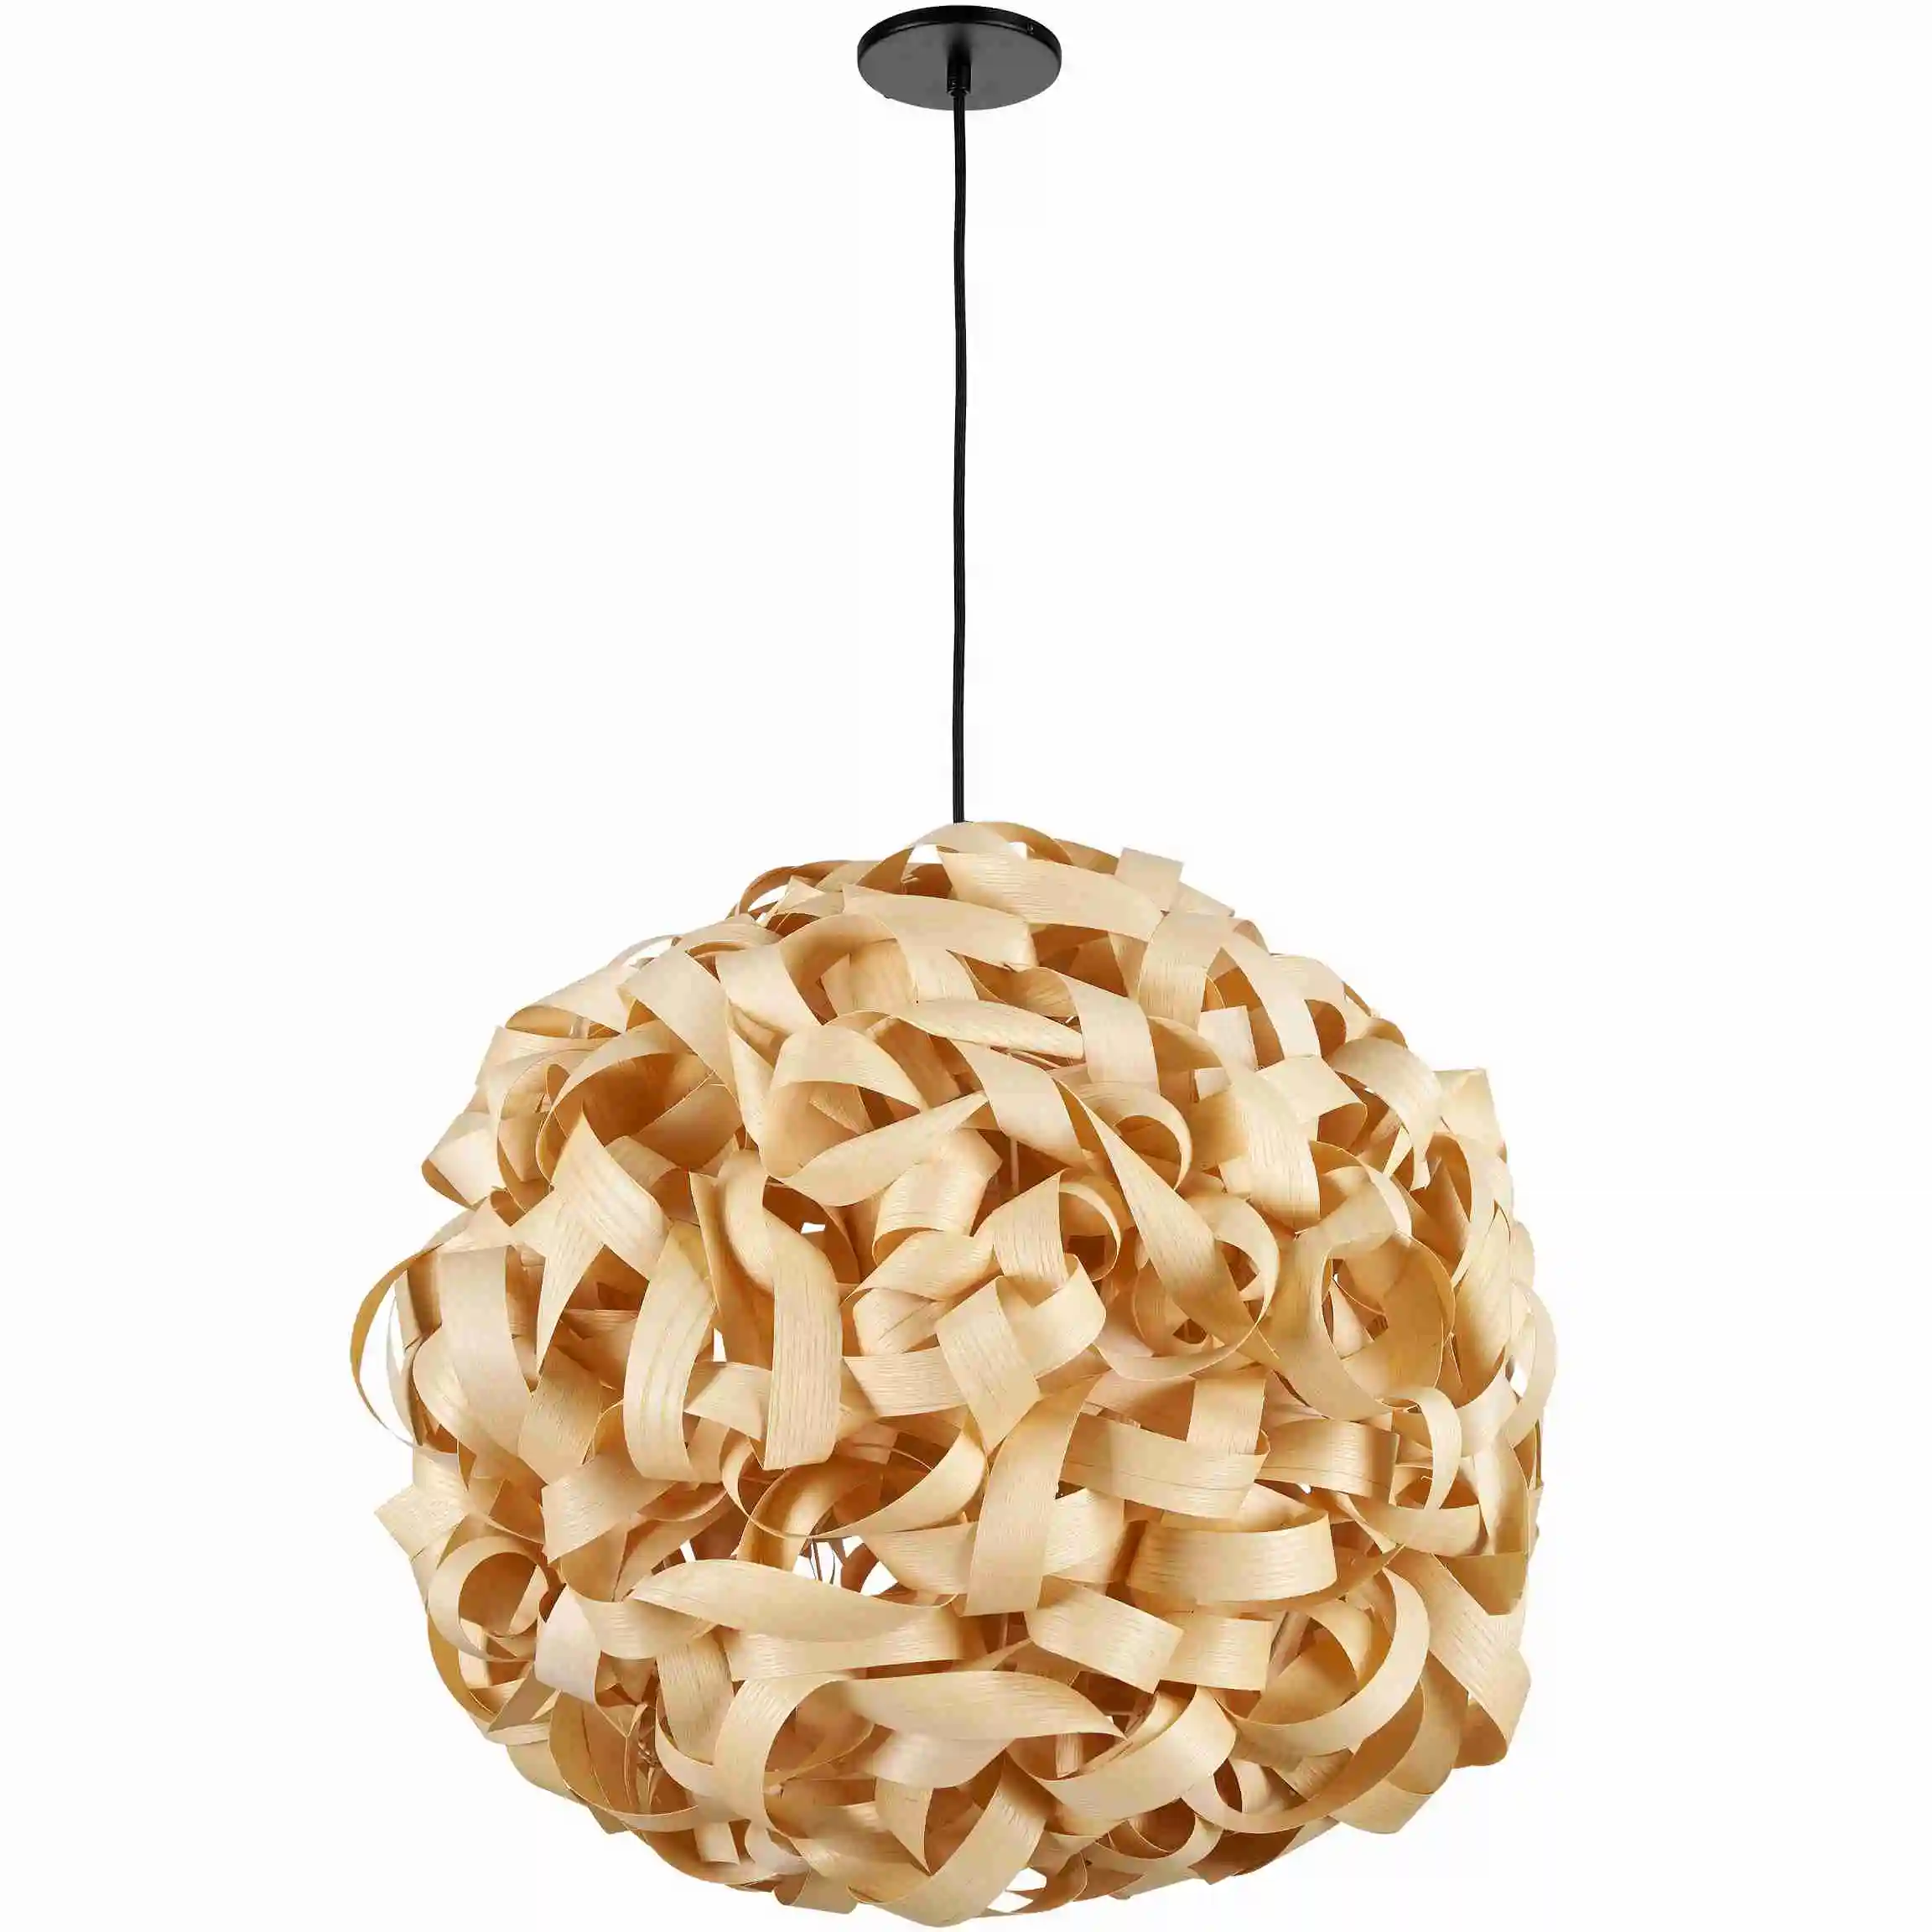 A Dainolite pendant light with ribbons resembling a large ball shape